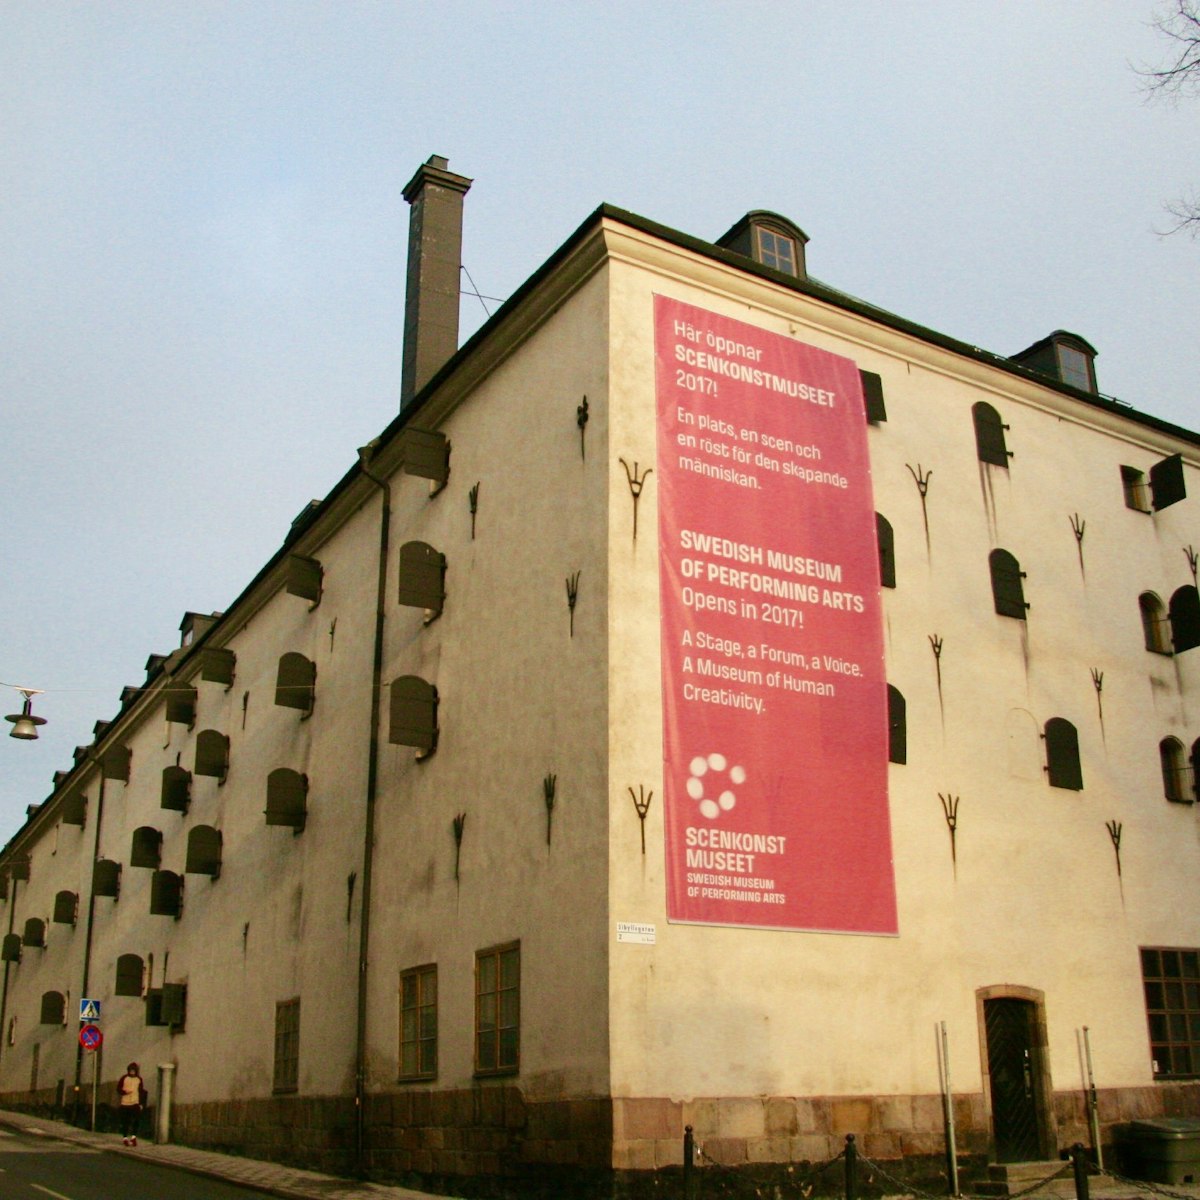 Swedish Museum of Performing Arts (Scenkonstmuseet)